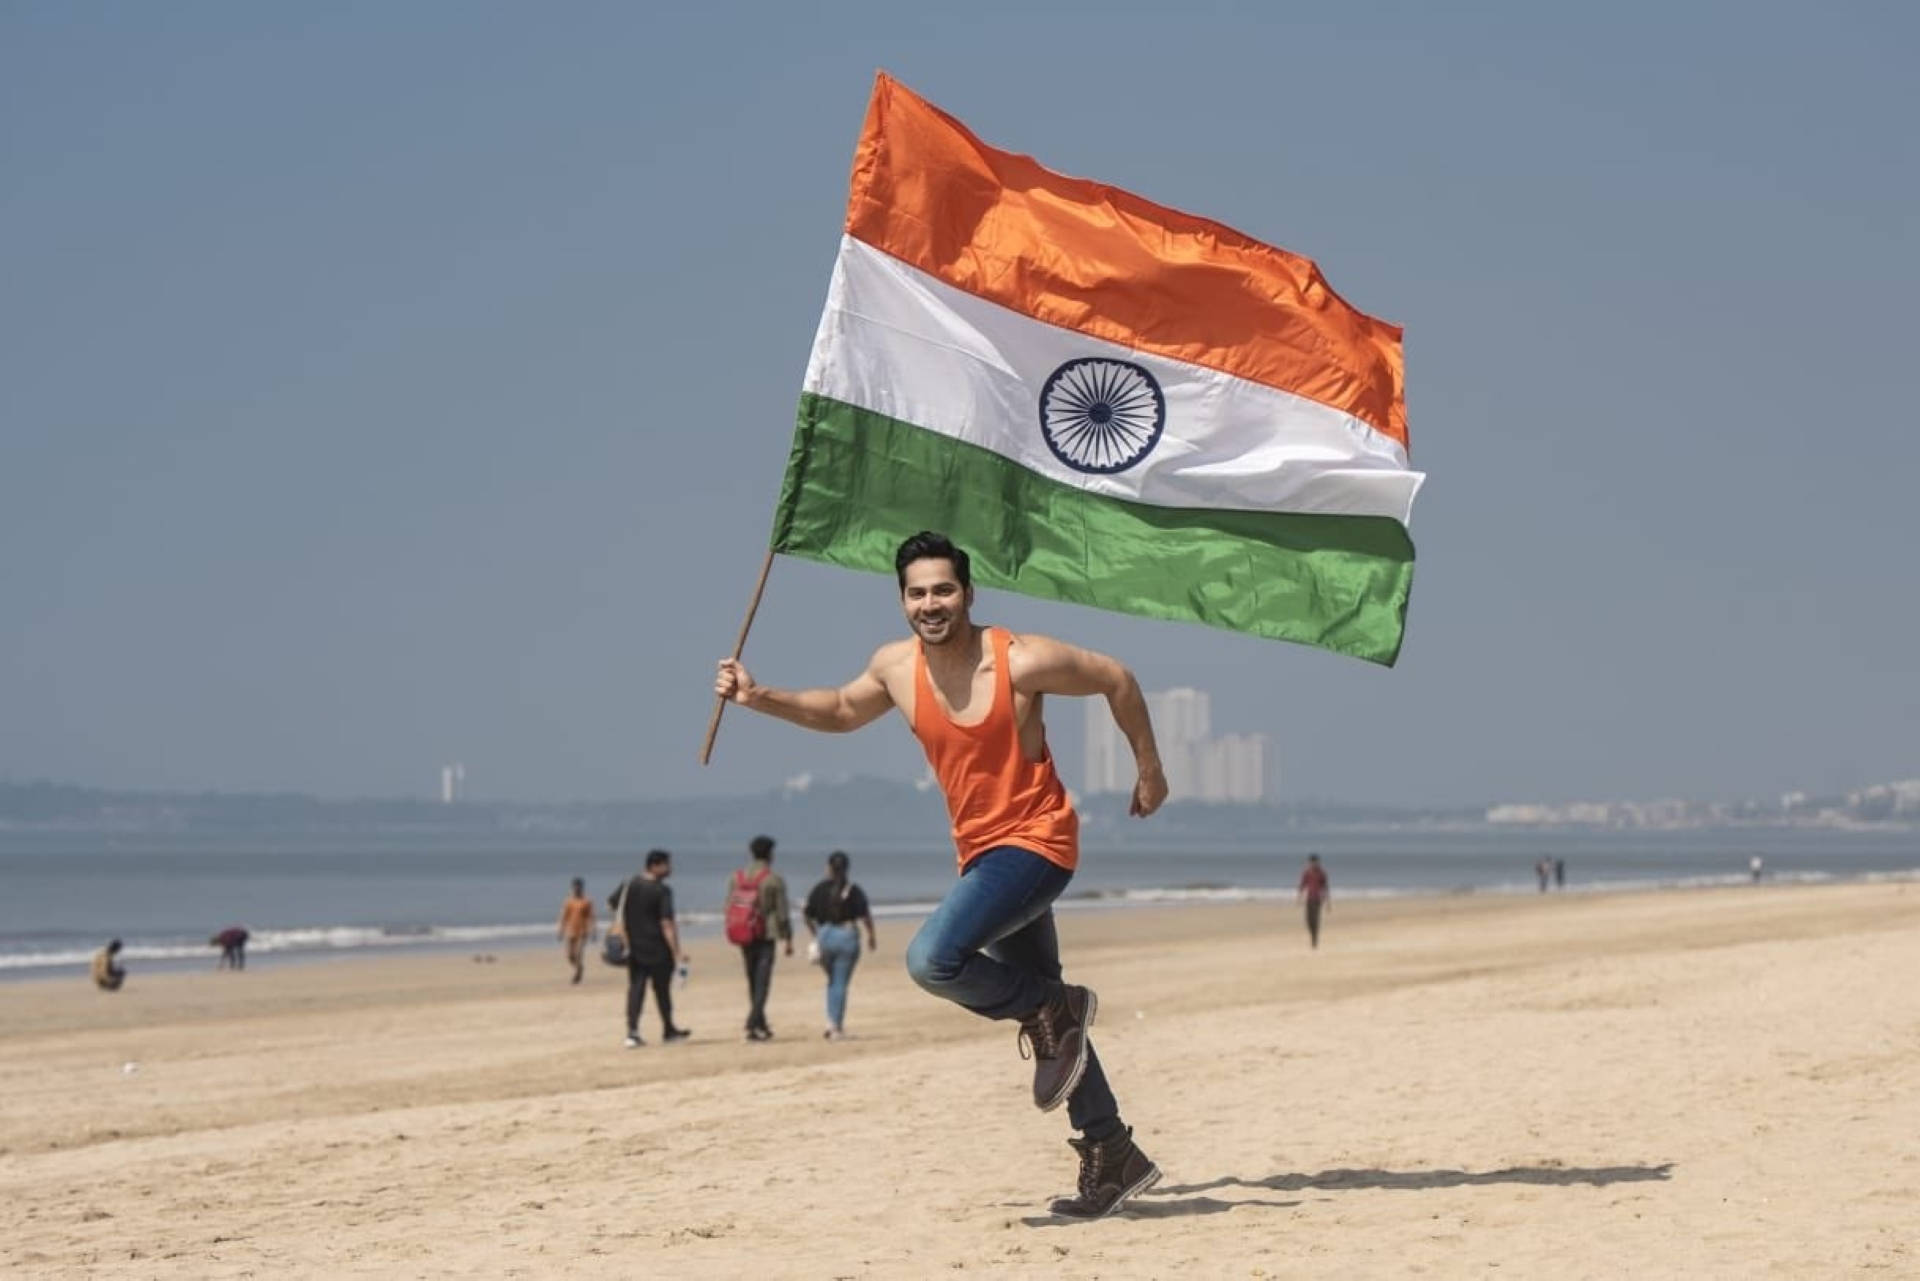 Varun Dhawan With The Indian Flag